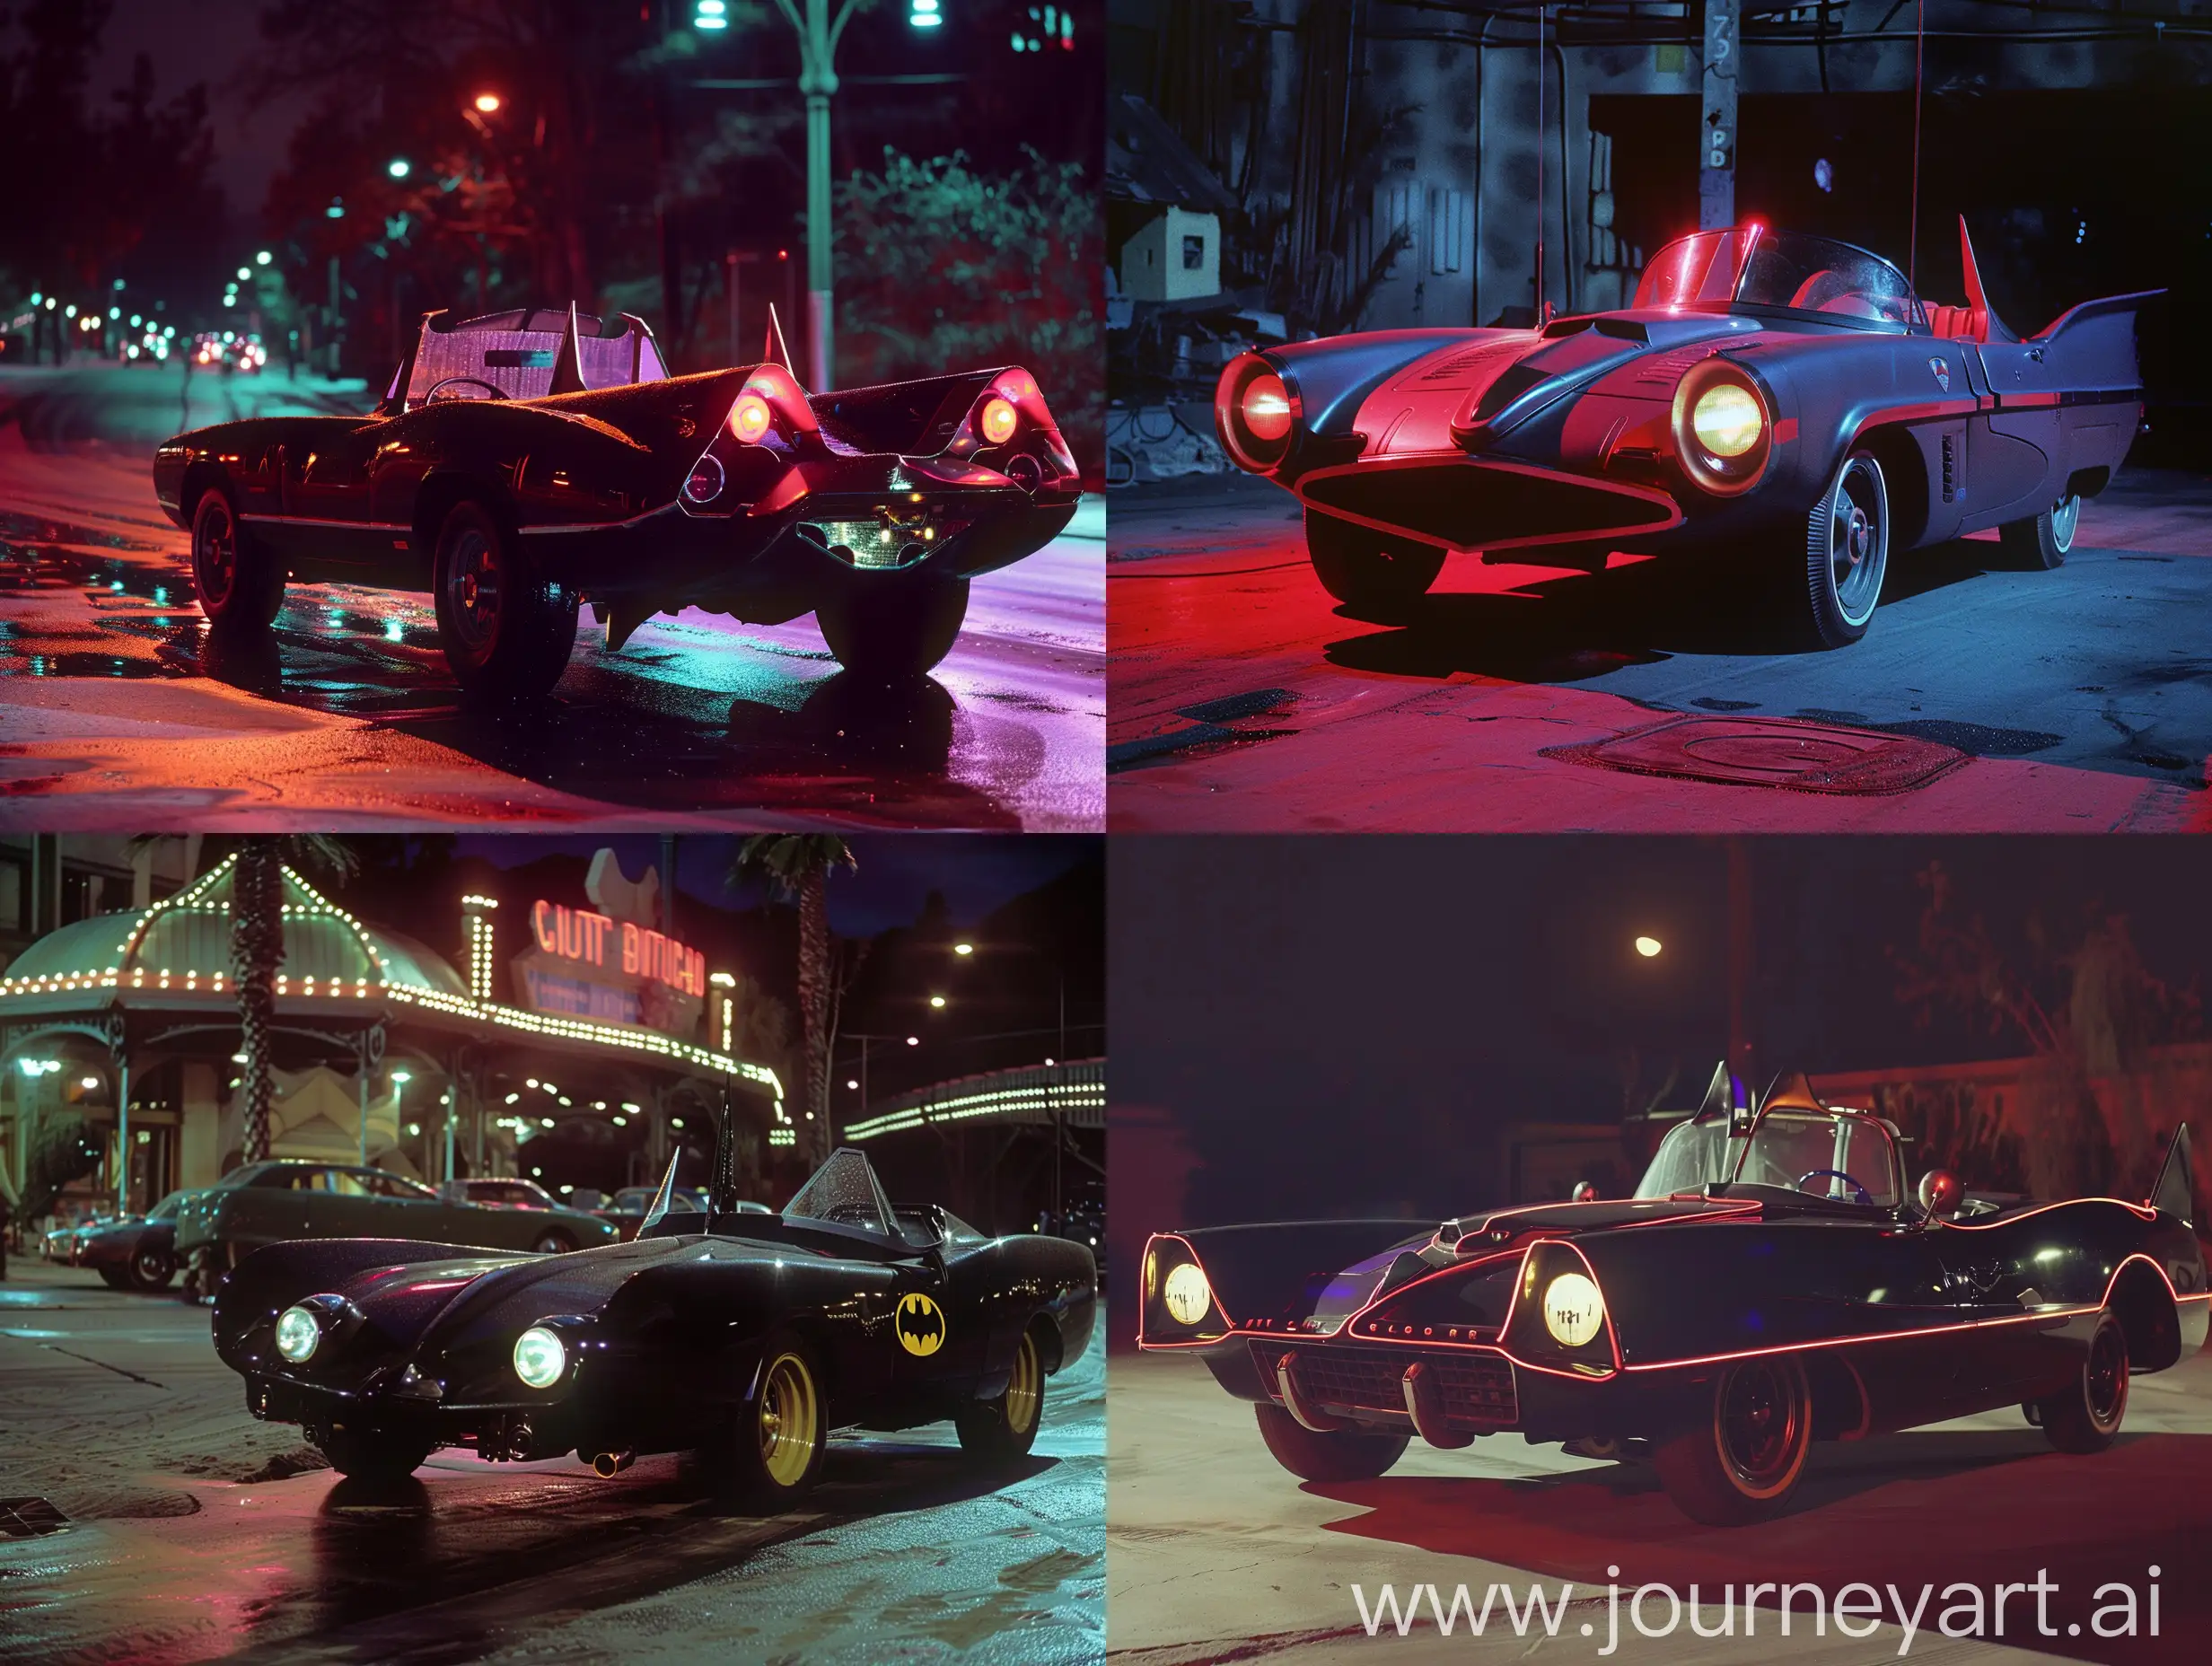 Vintage-Batmobile-Cruising-Through-the-Night-in-Vivid-Colory-Image